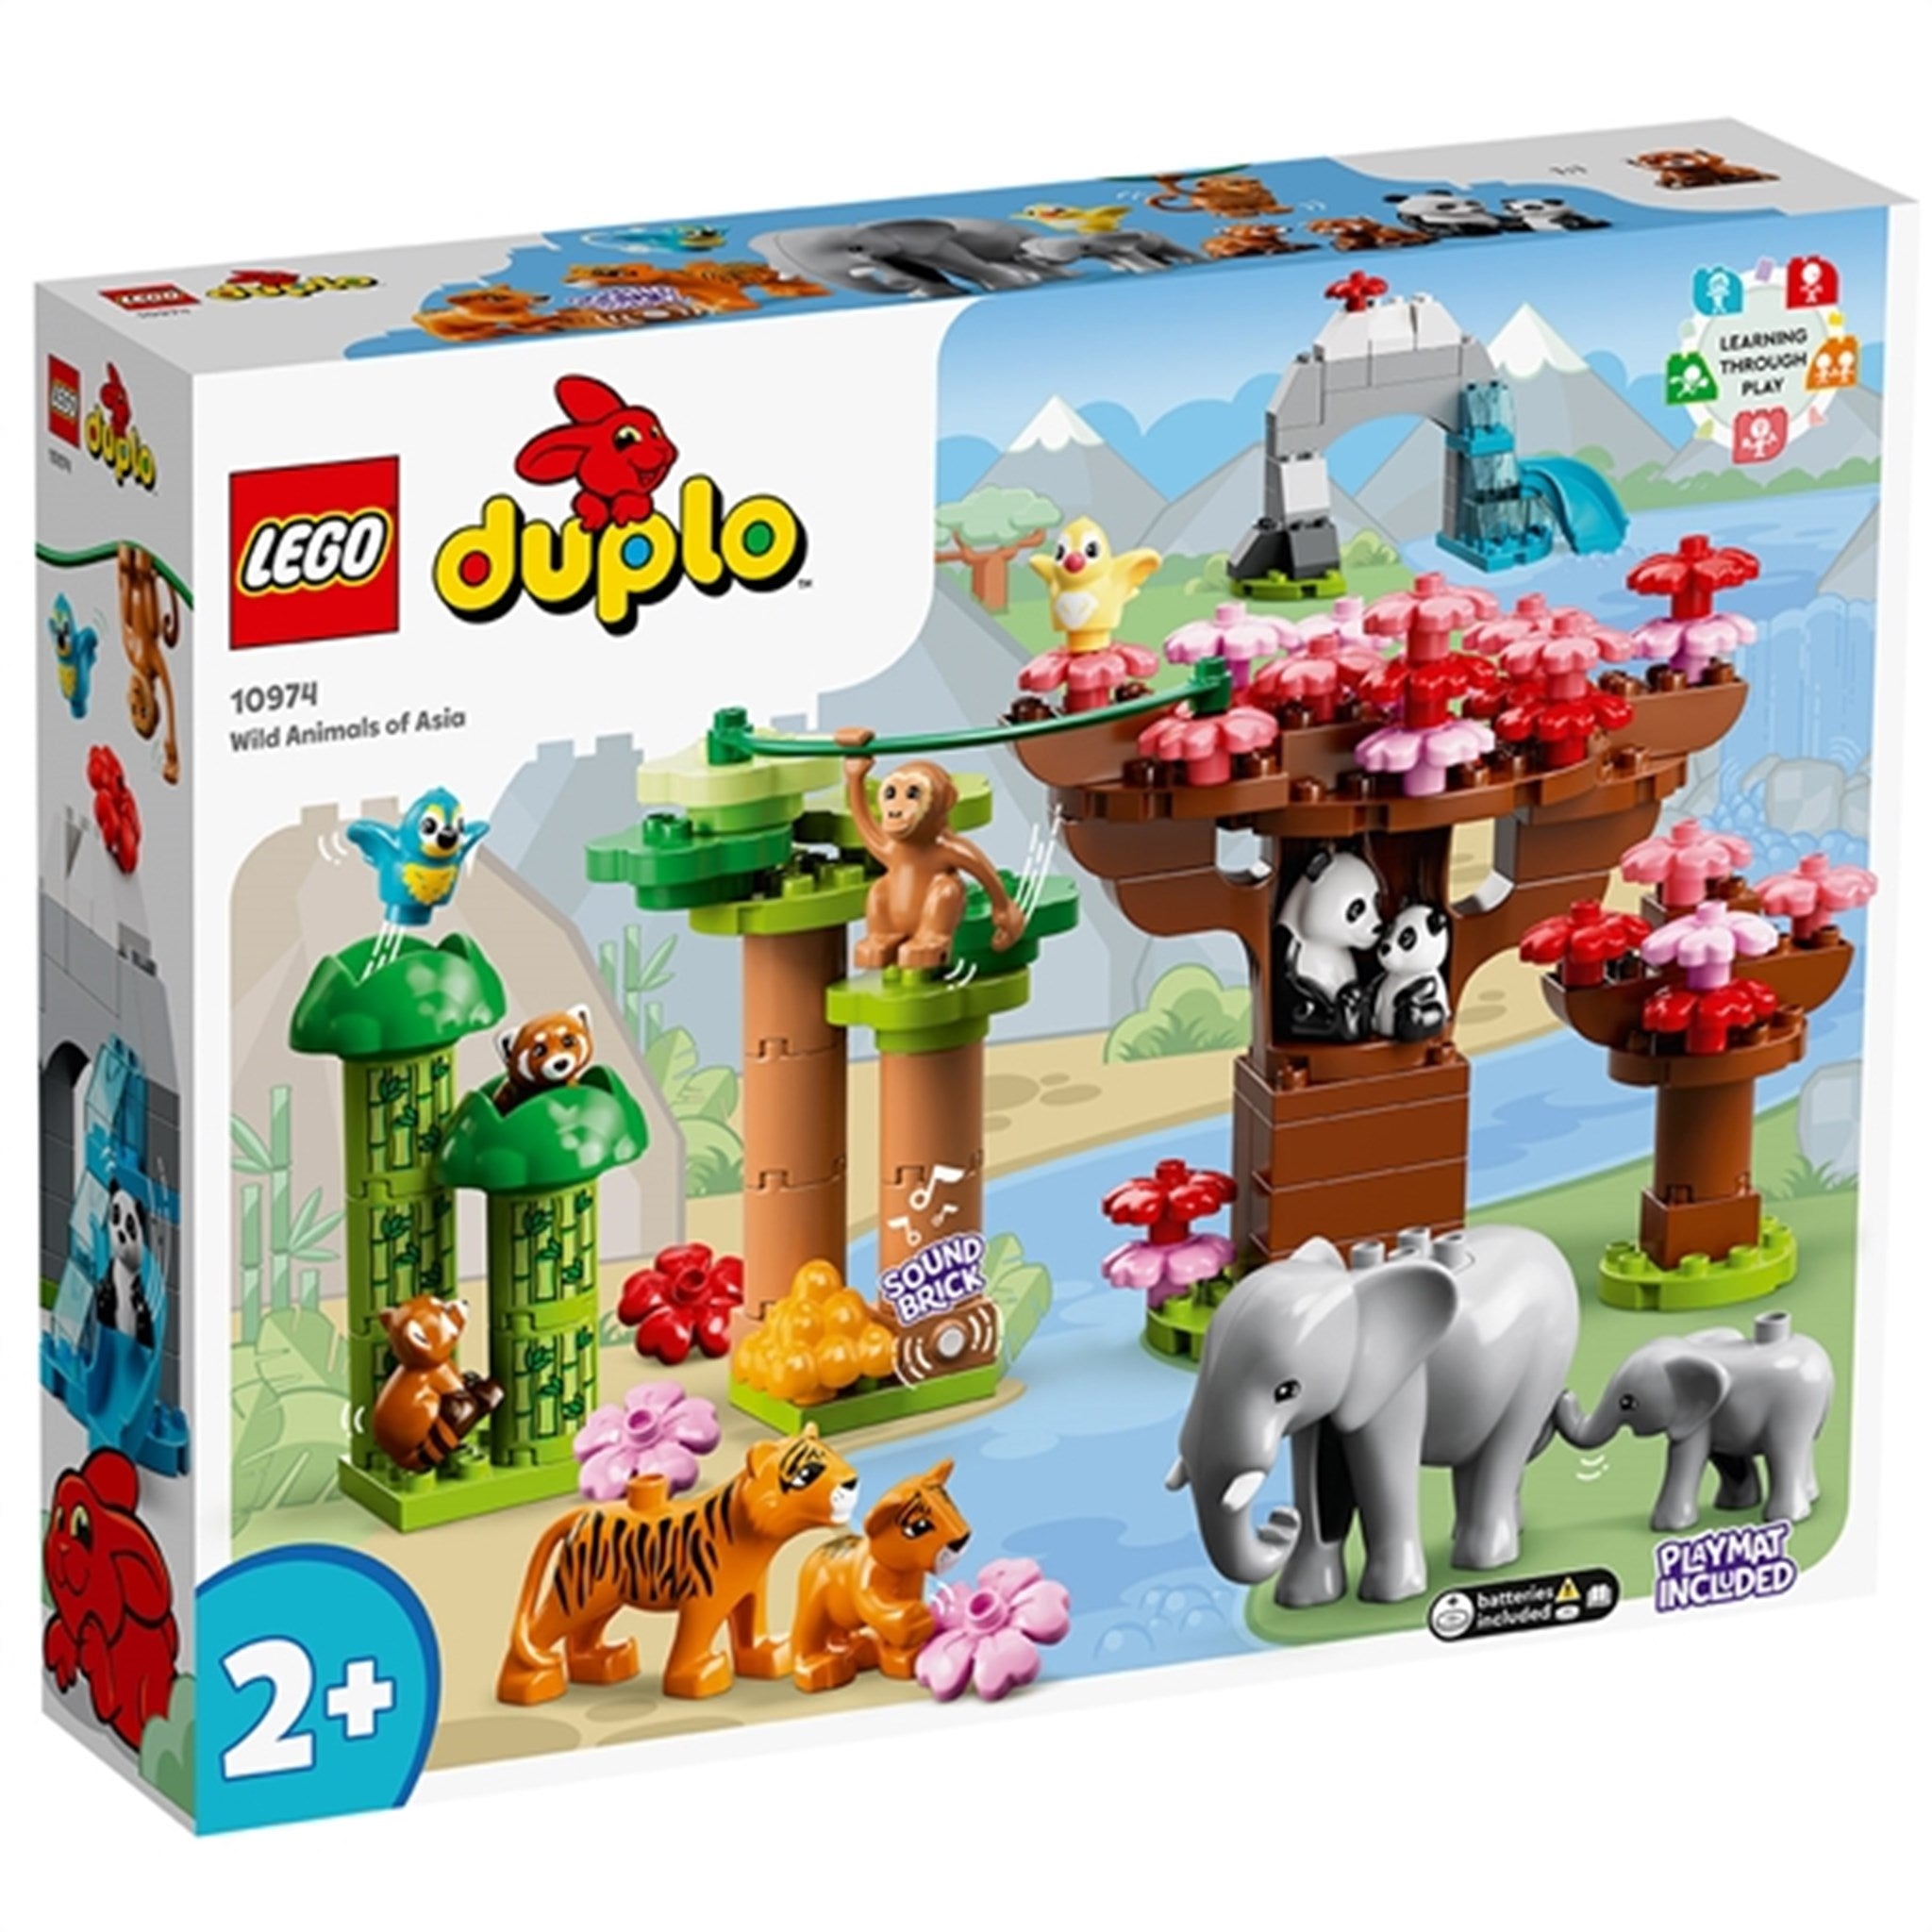 LEGO® DUPLO® Wild Animals of Asia